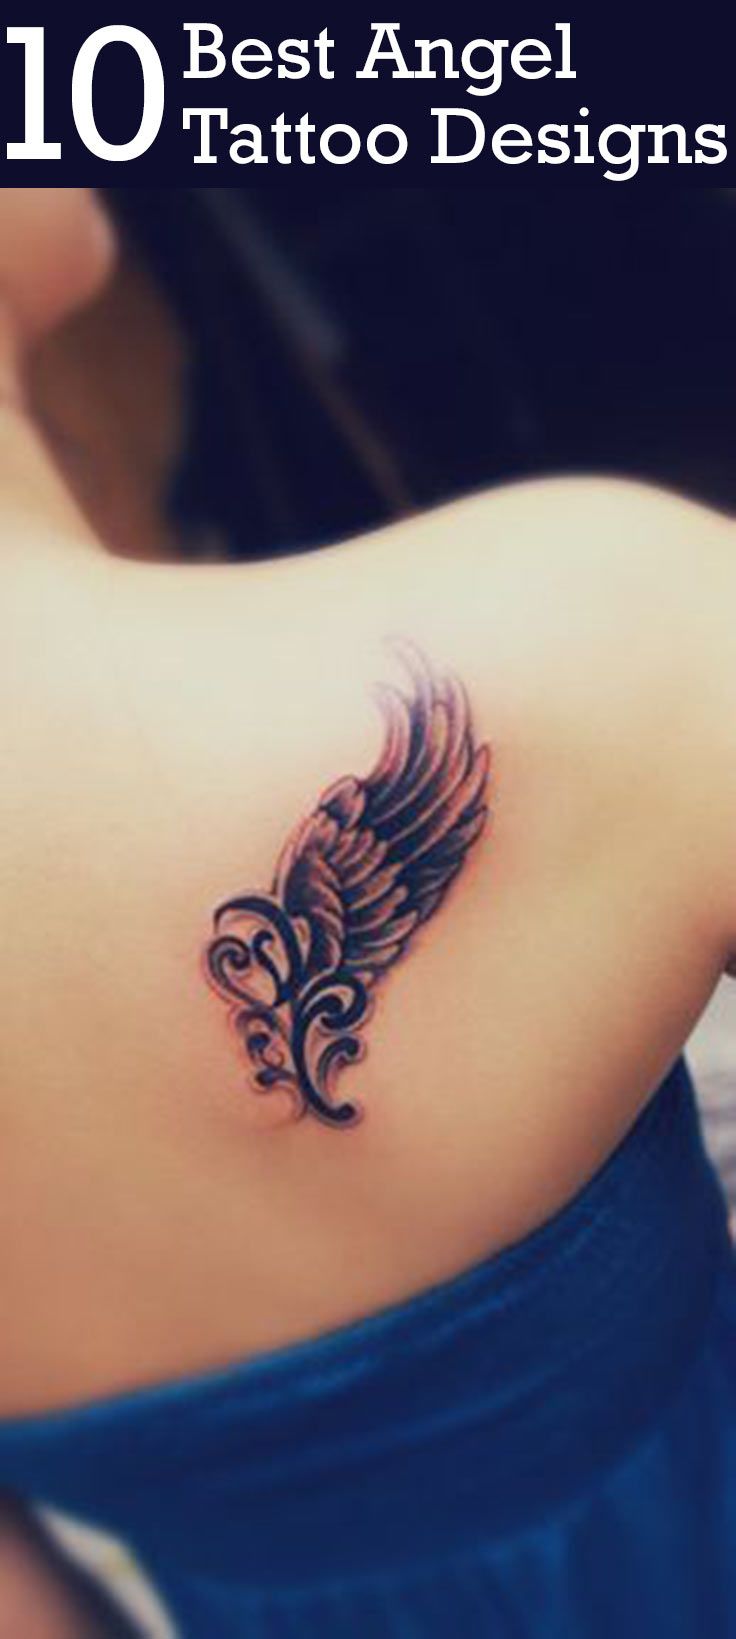 12 Angel Tattoo Designs You Must Love - Pretty Designs